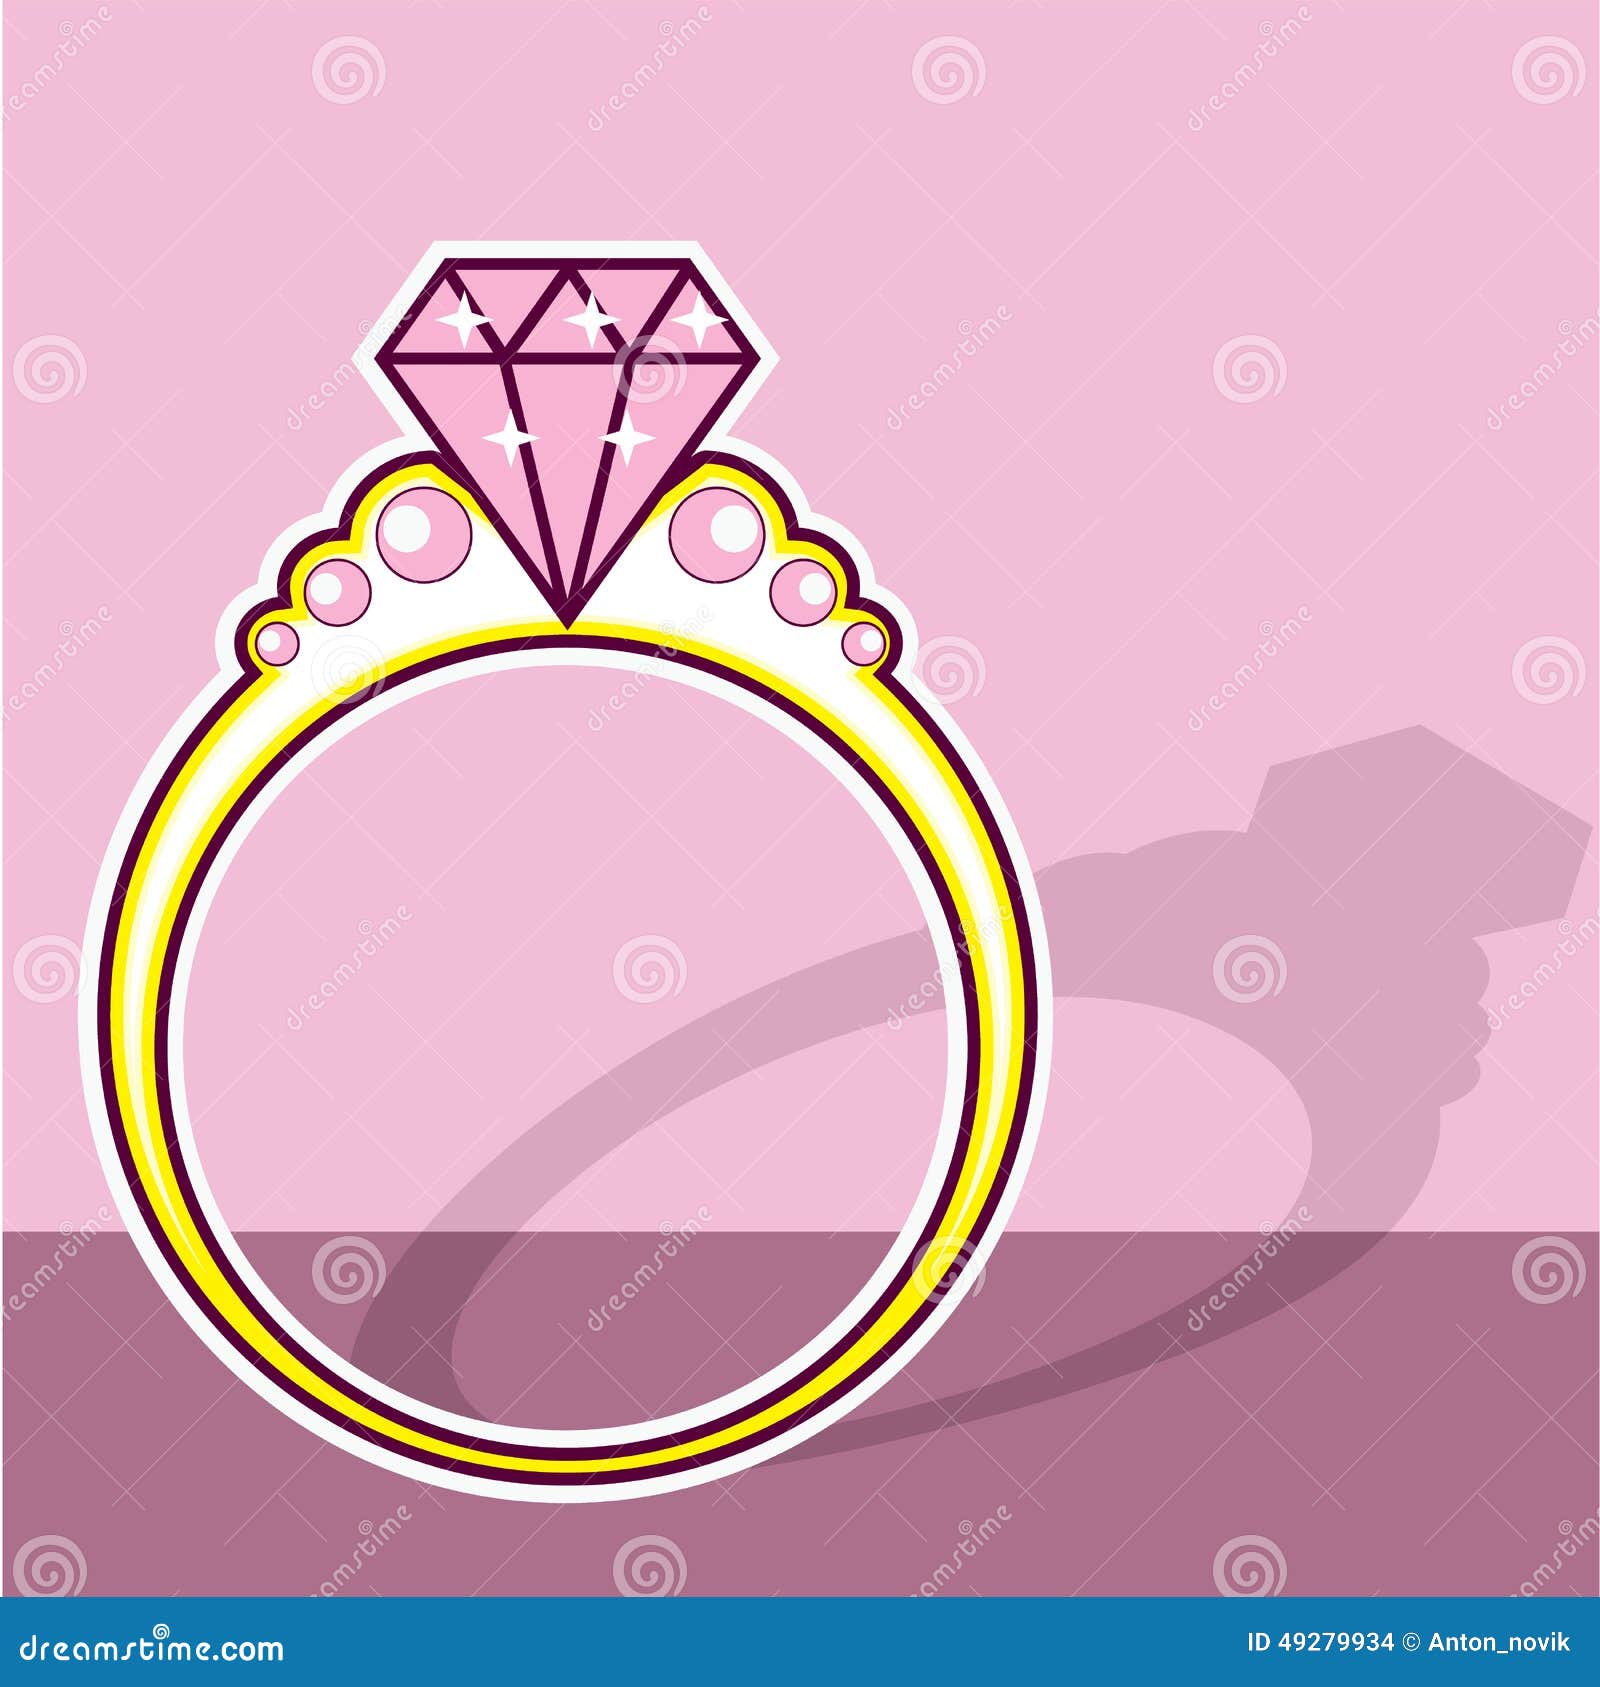 pink diamond clip art free - photo #24